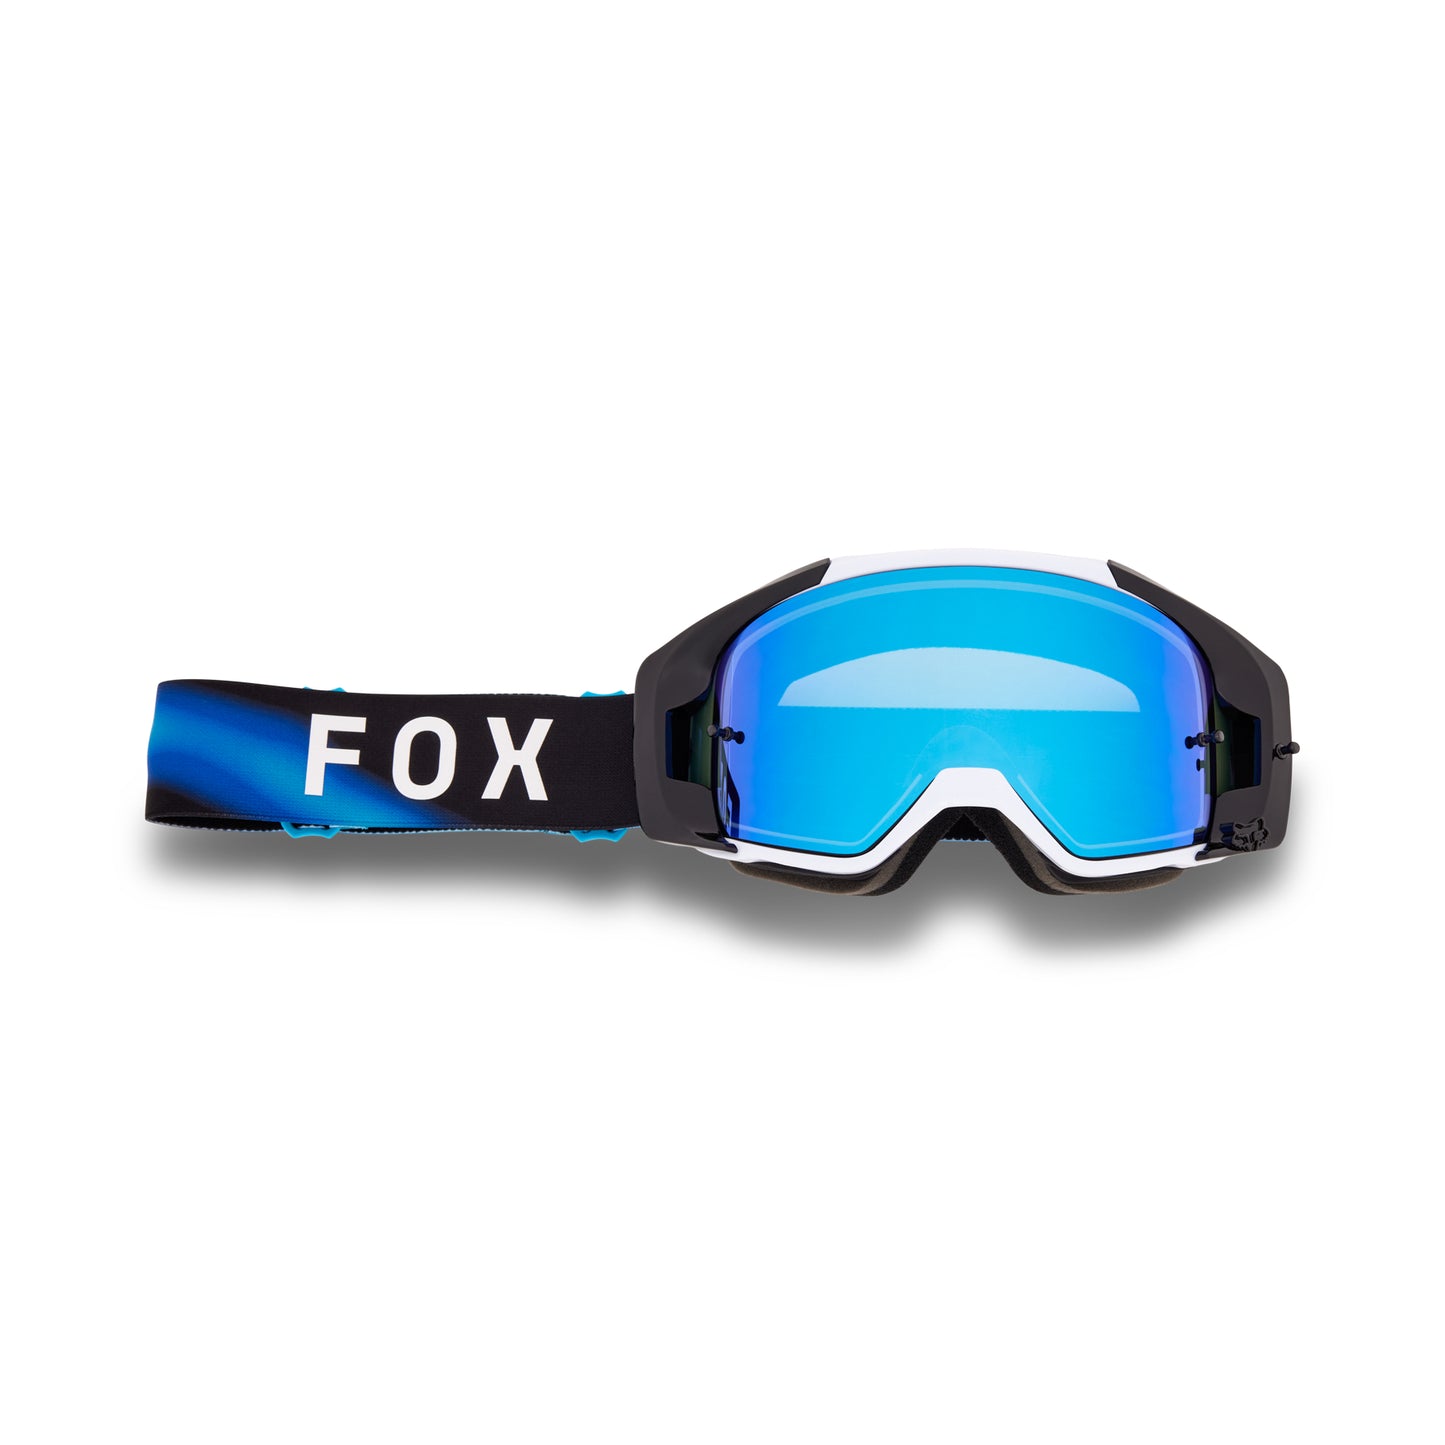 Fox Vue Volatile Goggles - One Size Fits Most - Black - Blue - Spark Mirror Blue Lens - Image 1